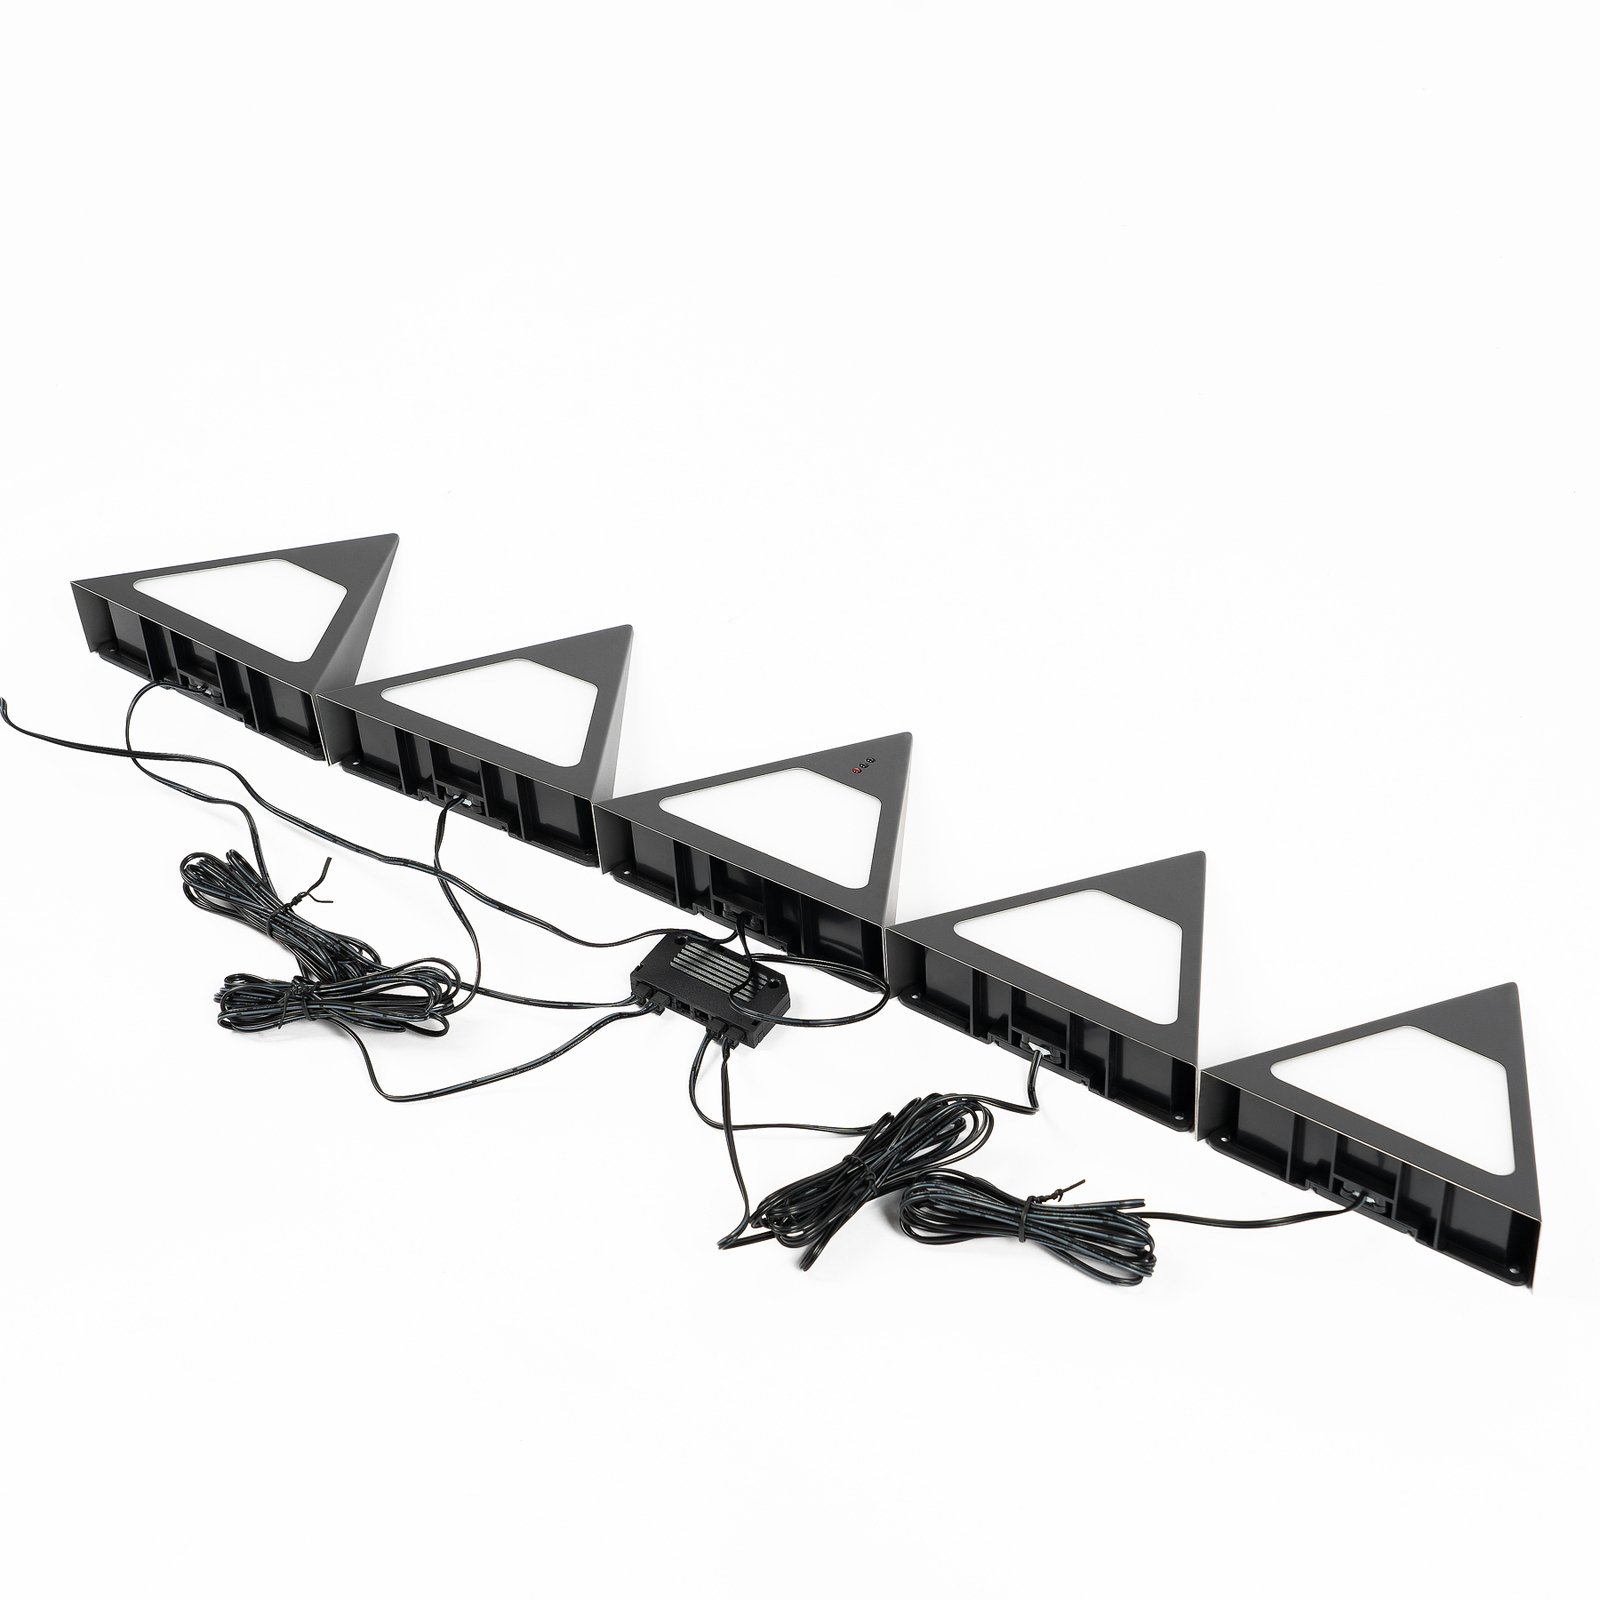 Prios Odia LED-kaapinvalaisin, musta, 5 kpl, sarja